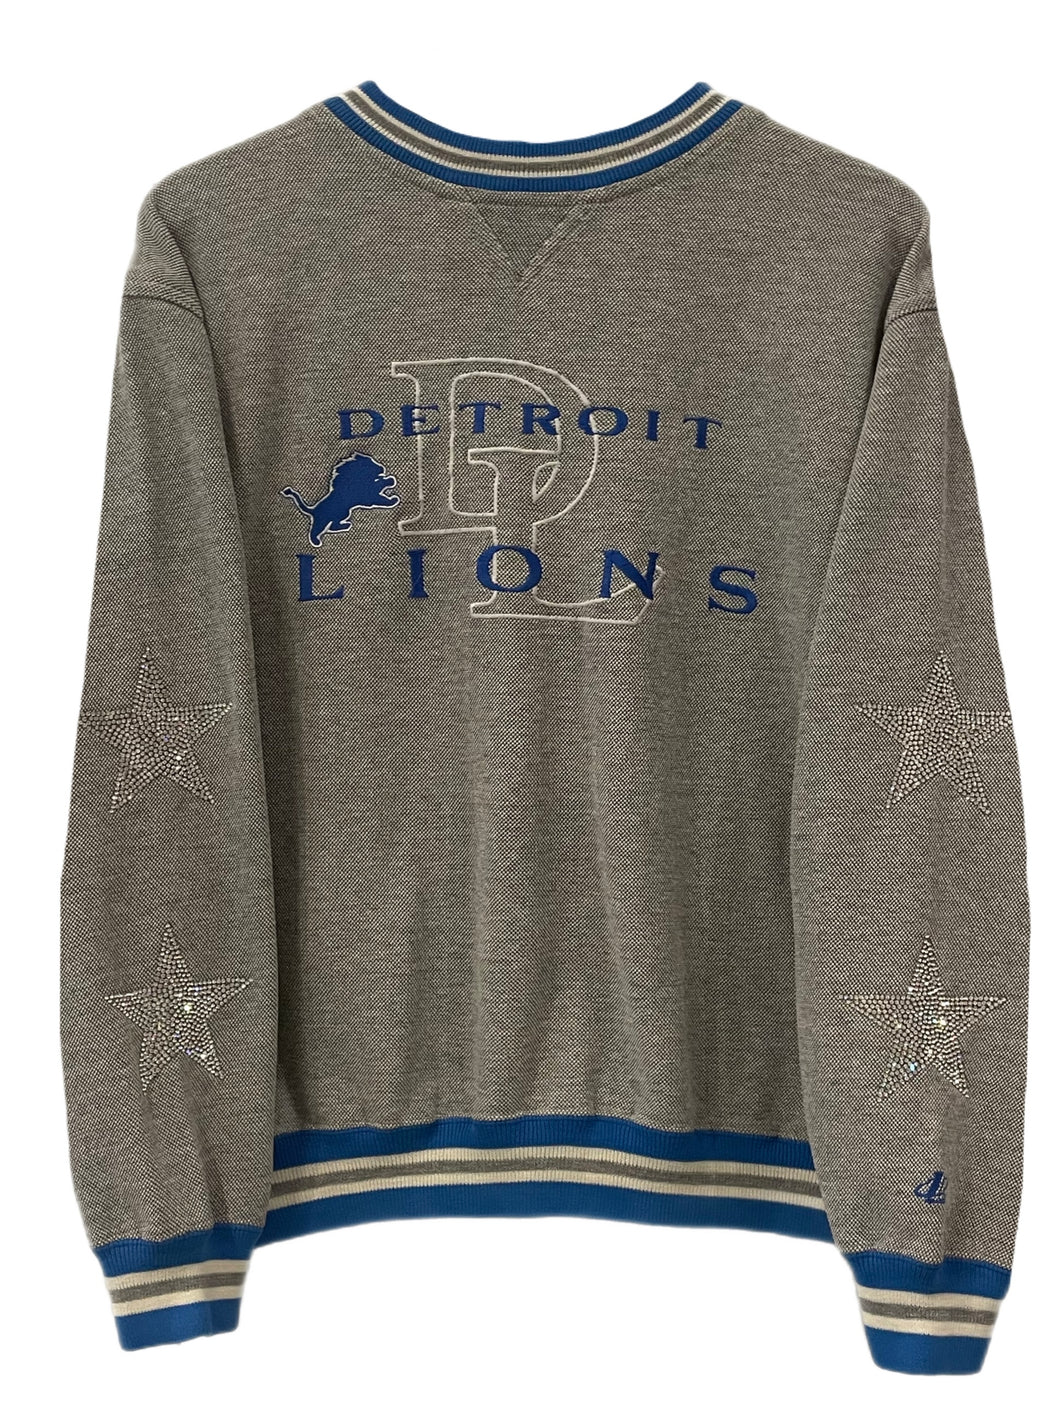 ShopCrystalRags Philadelphia Eagles, NFL One of A Kind Vintage Sweatshirt with Crystal Star Design.